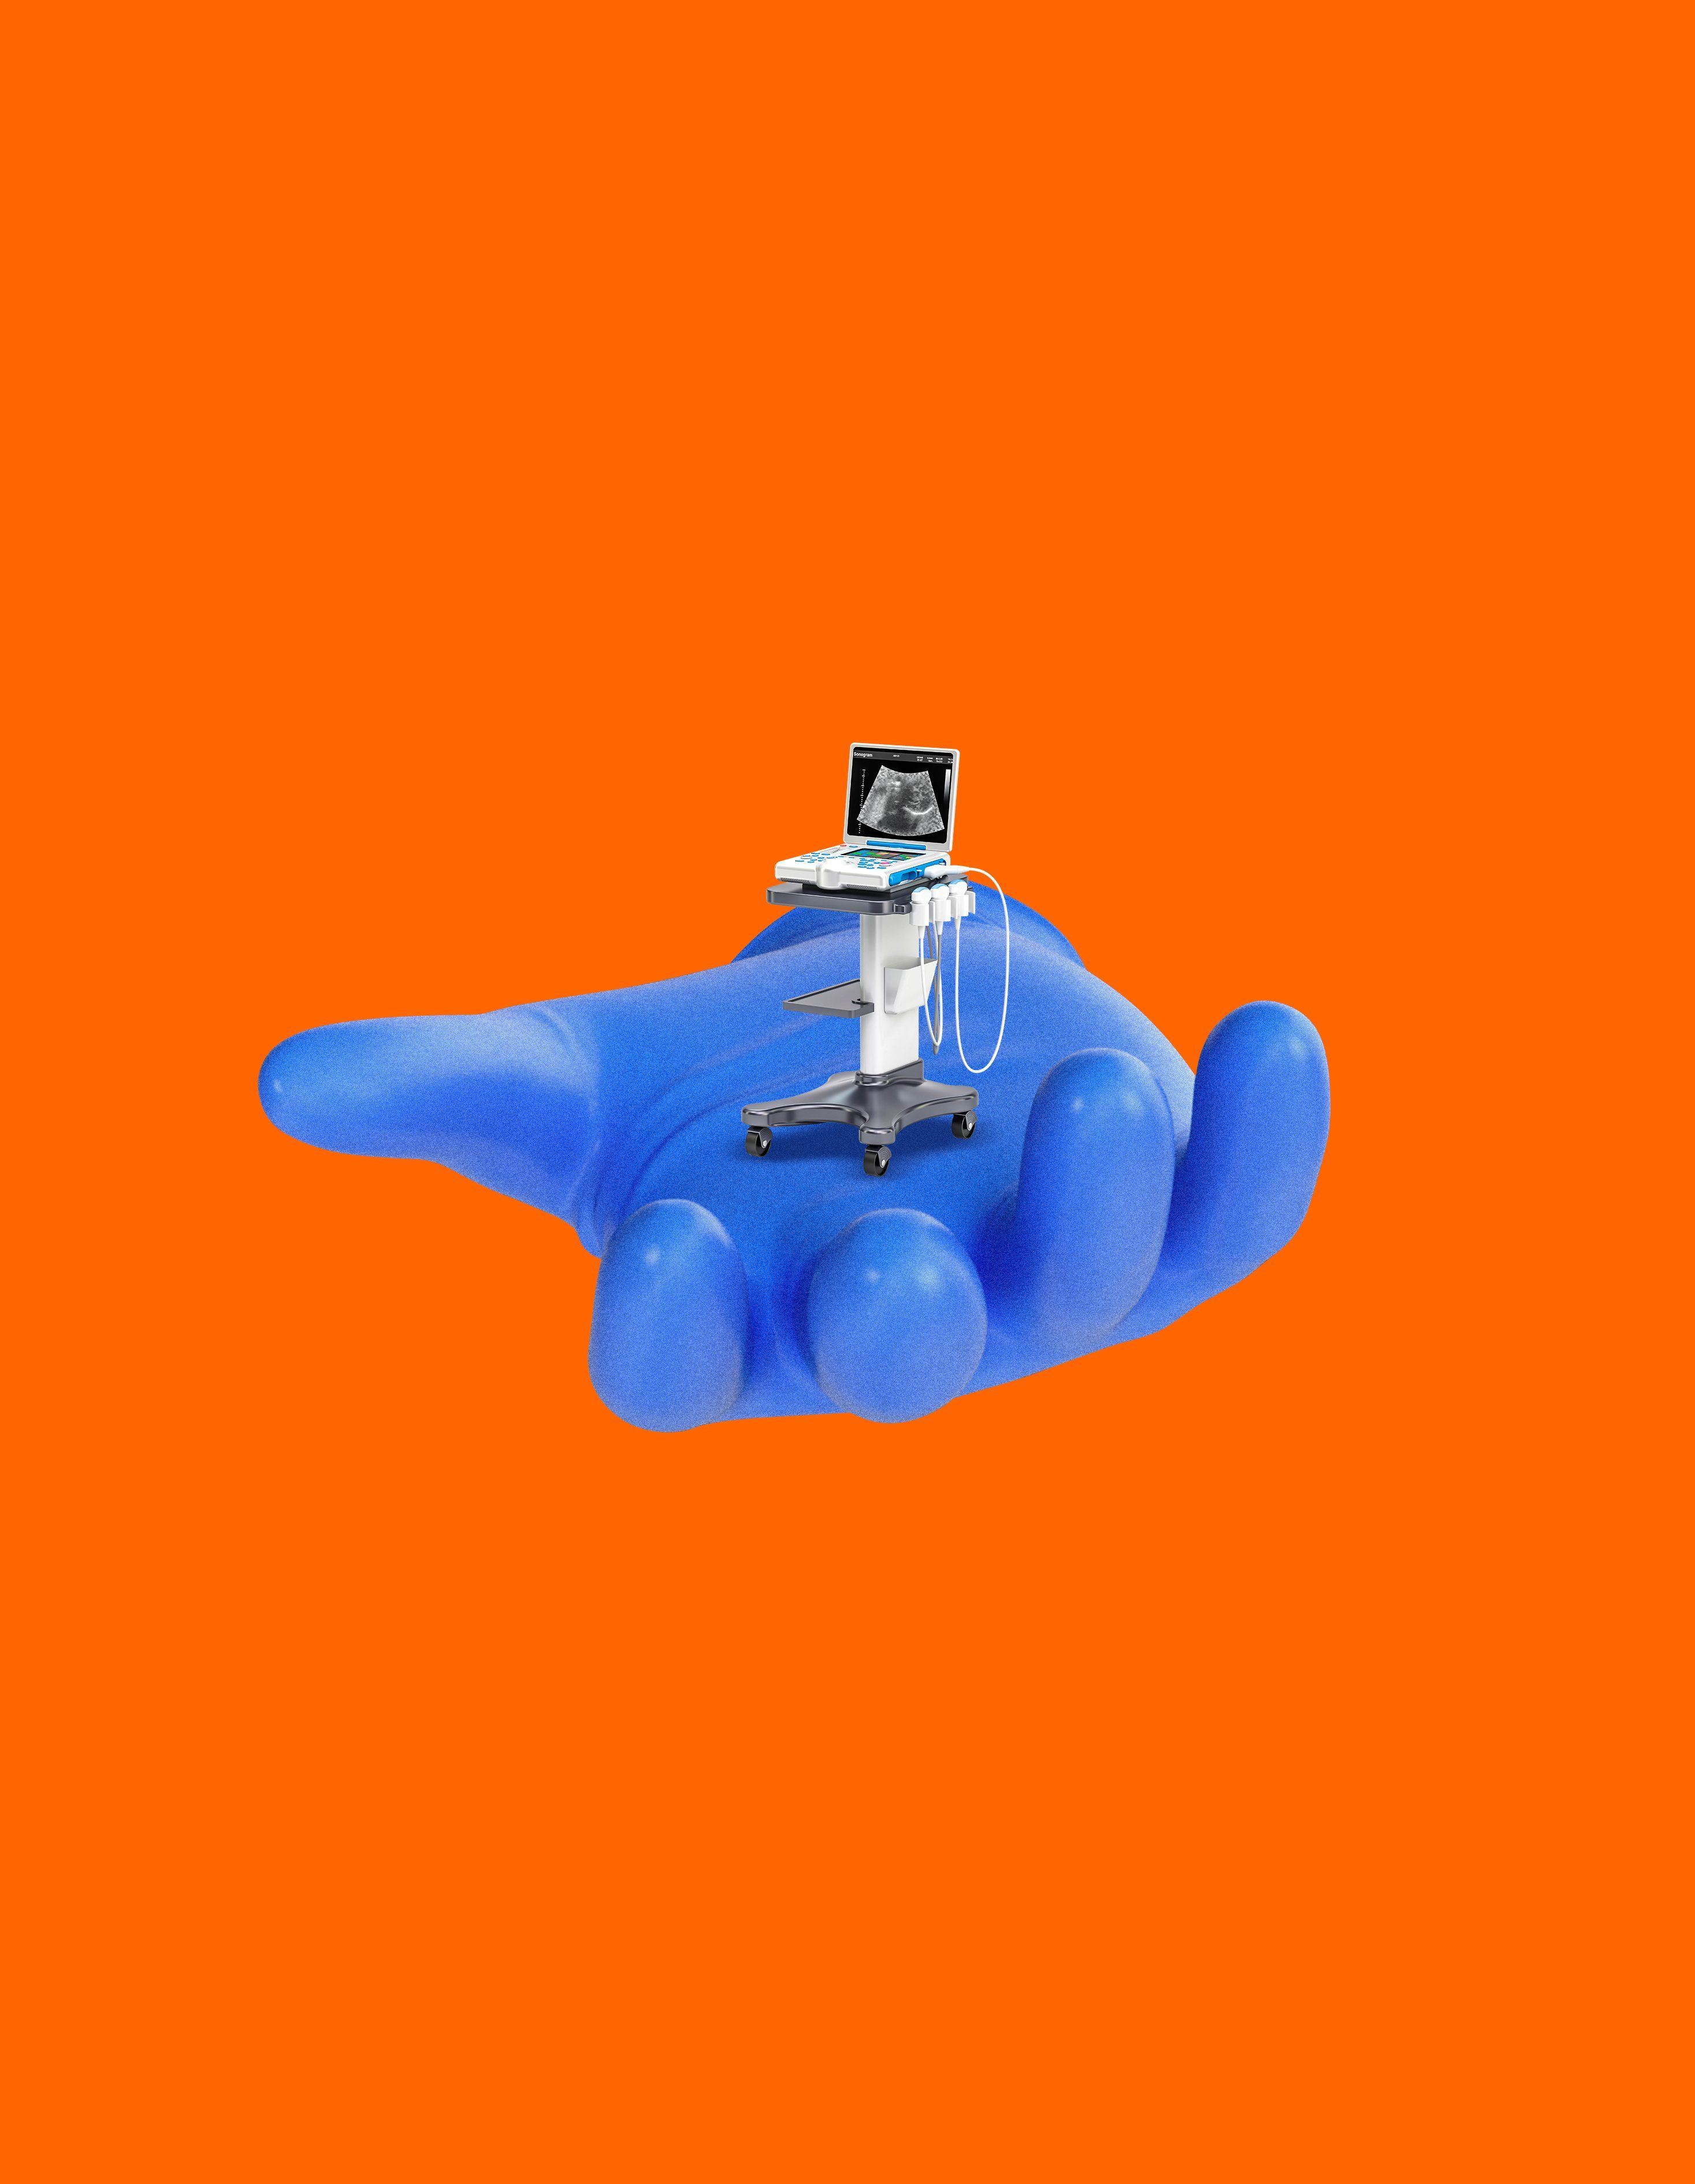 Photo illustration of a gloved hand holding a tiny ultrasound machine